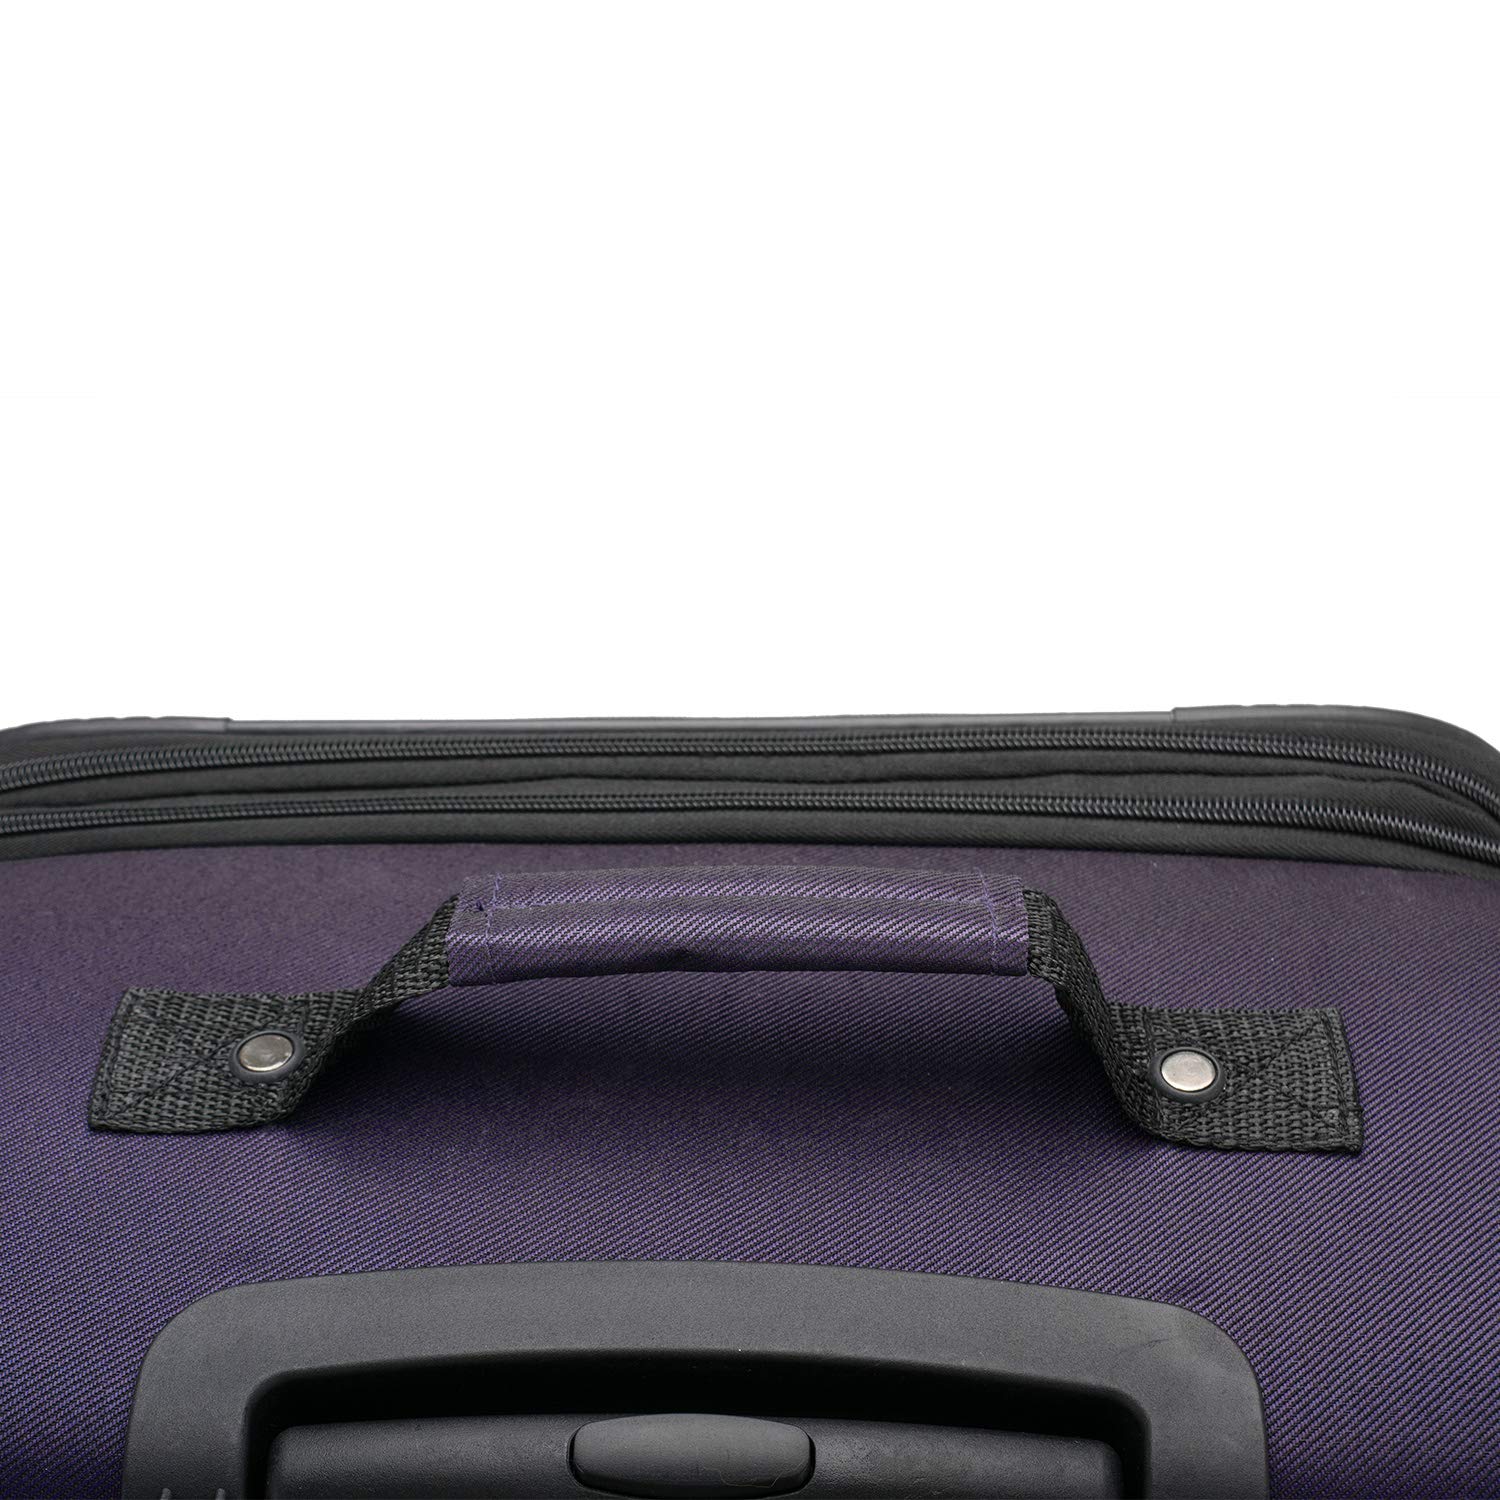 U.S. Traveler Aviron Bay Expandable Softside Spinner Wheels, Purple, 3 Piece Luggage